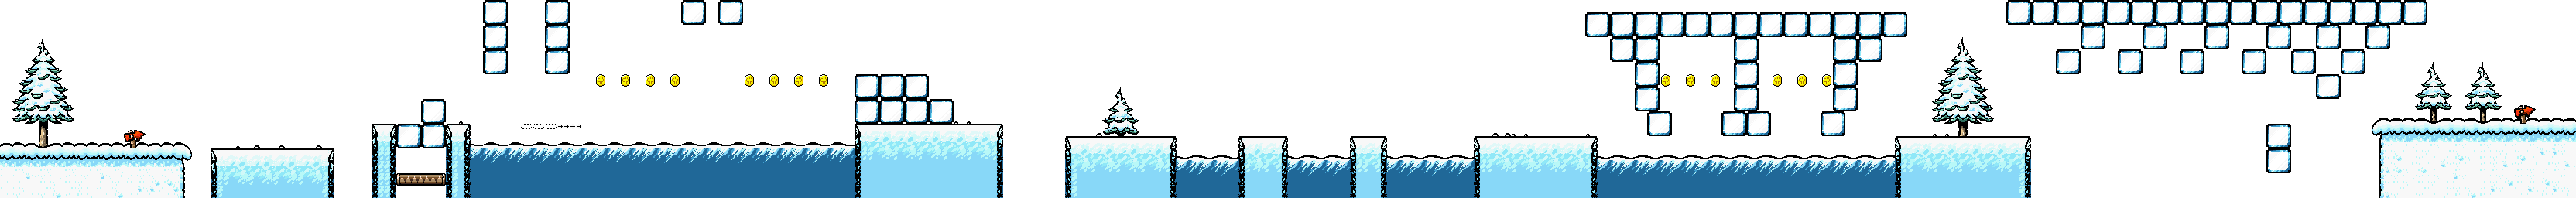 Super Mario World 2: Yoshi's Island - 5-3: Danger - Icy Conditions Ahead (1/7)